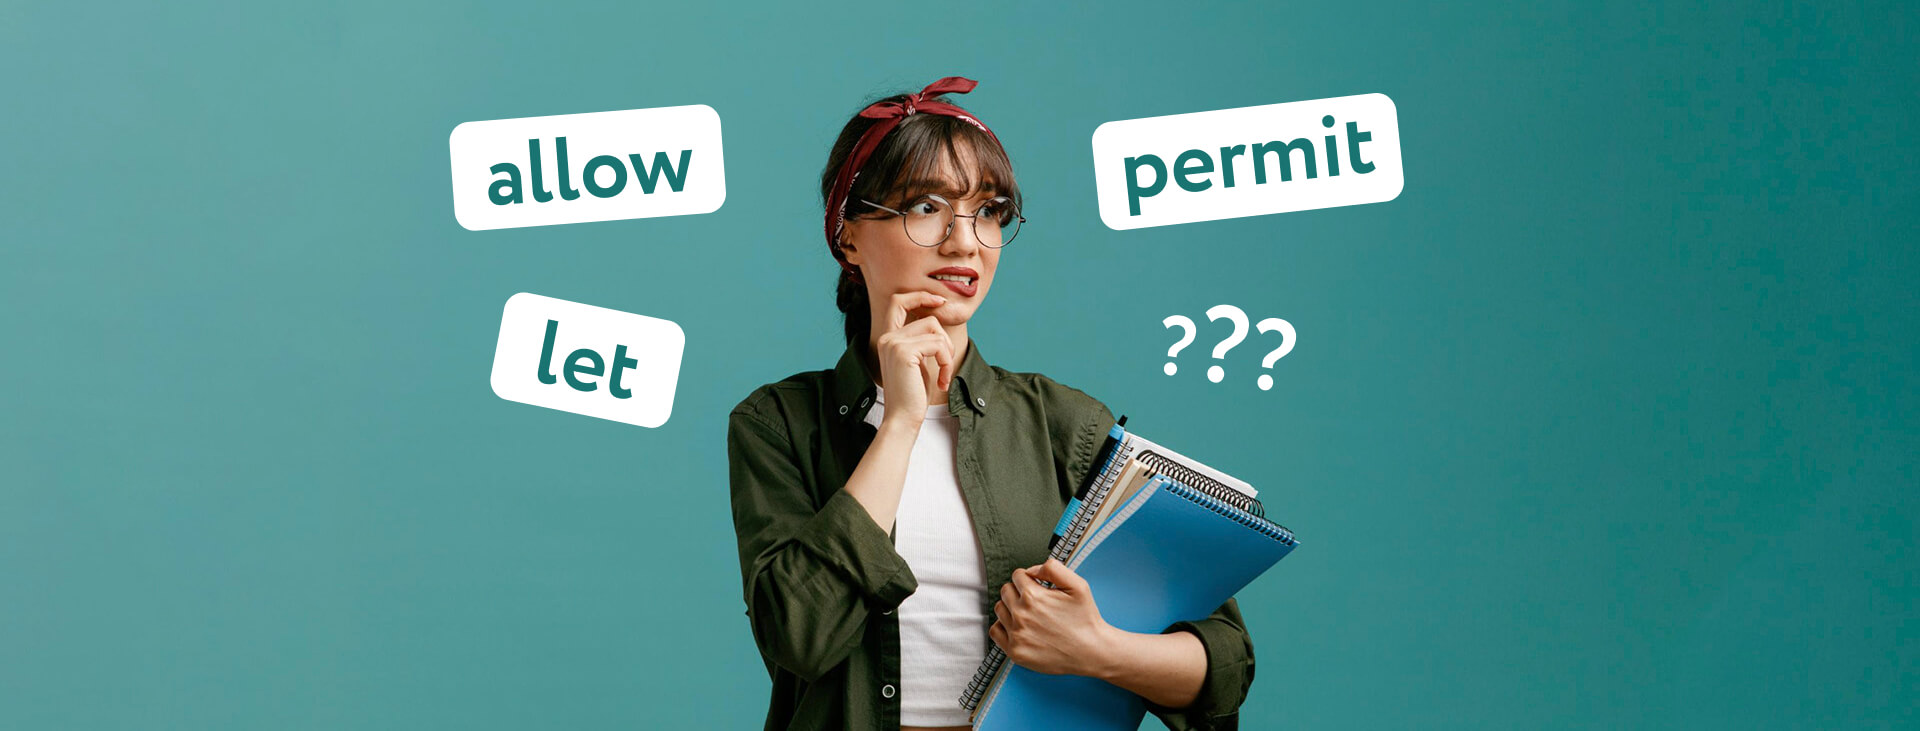 Allow, let и permit: объясняем разницу простыми словами